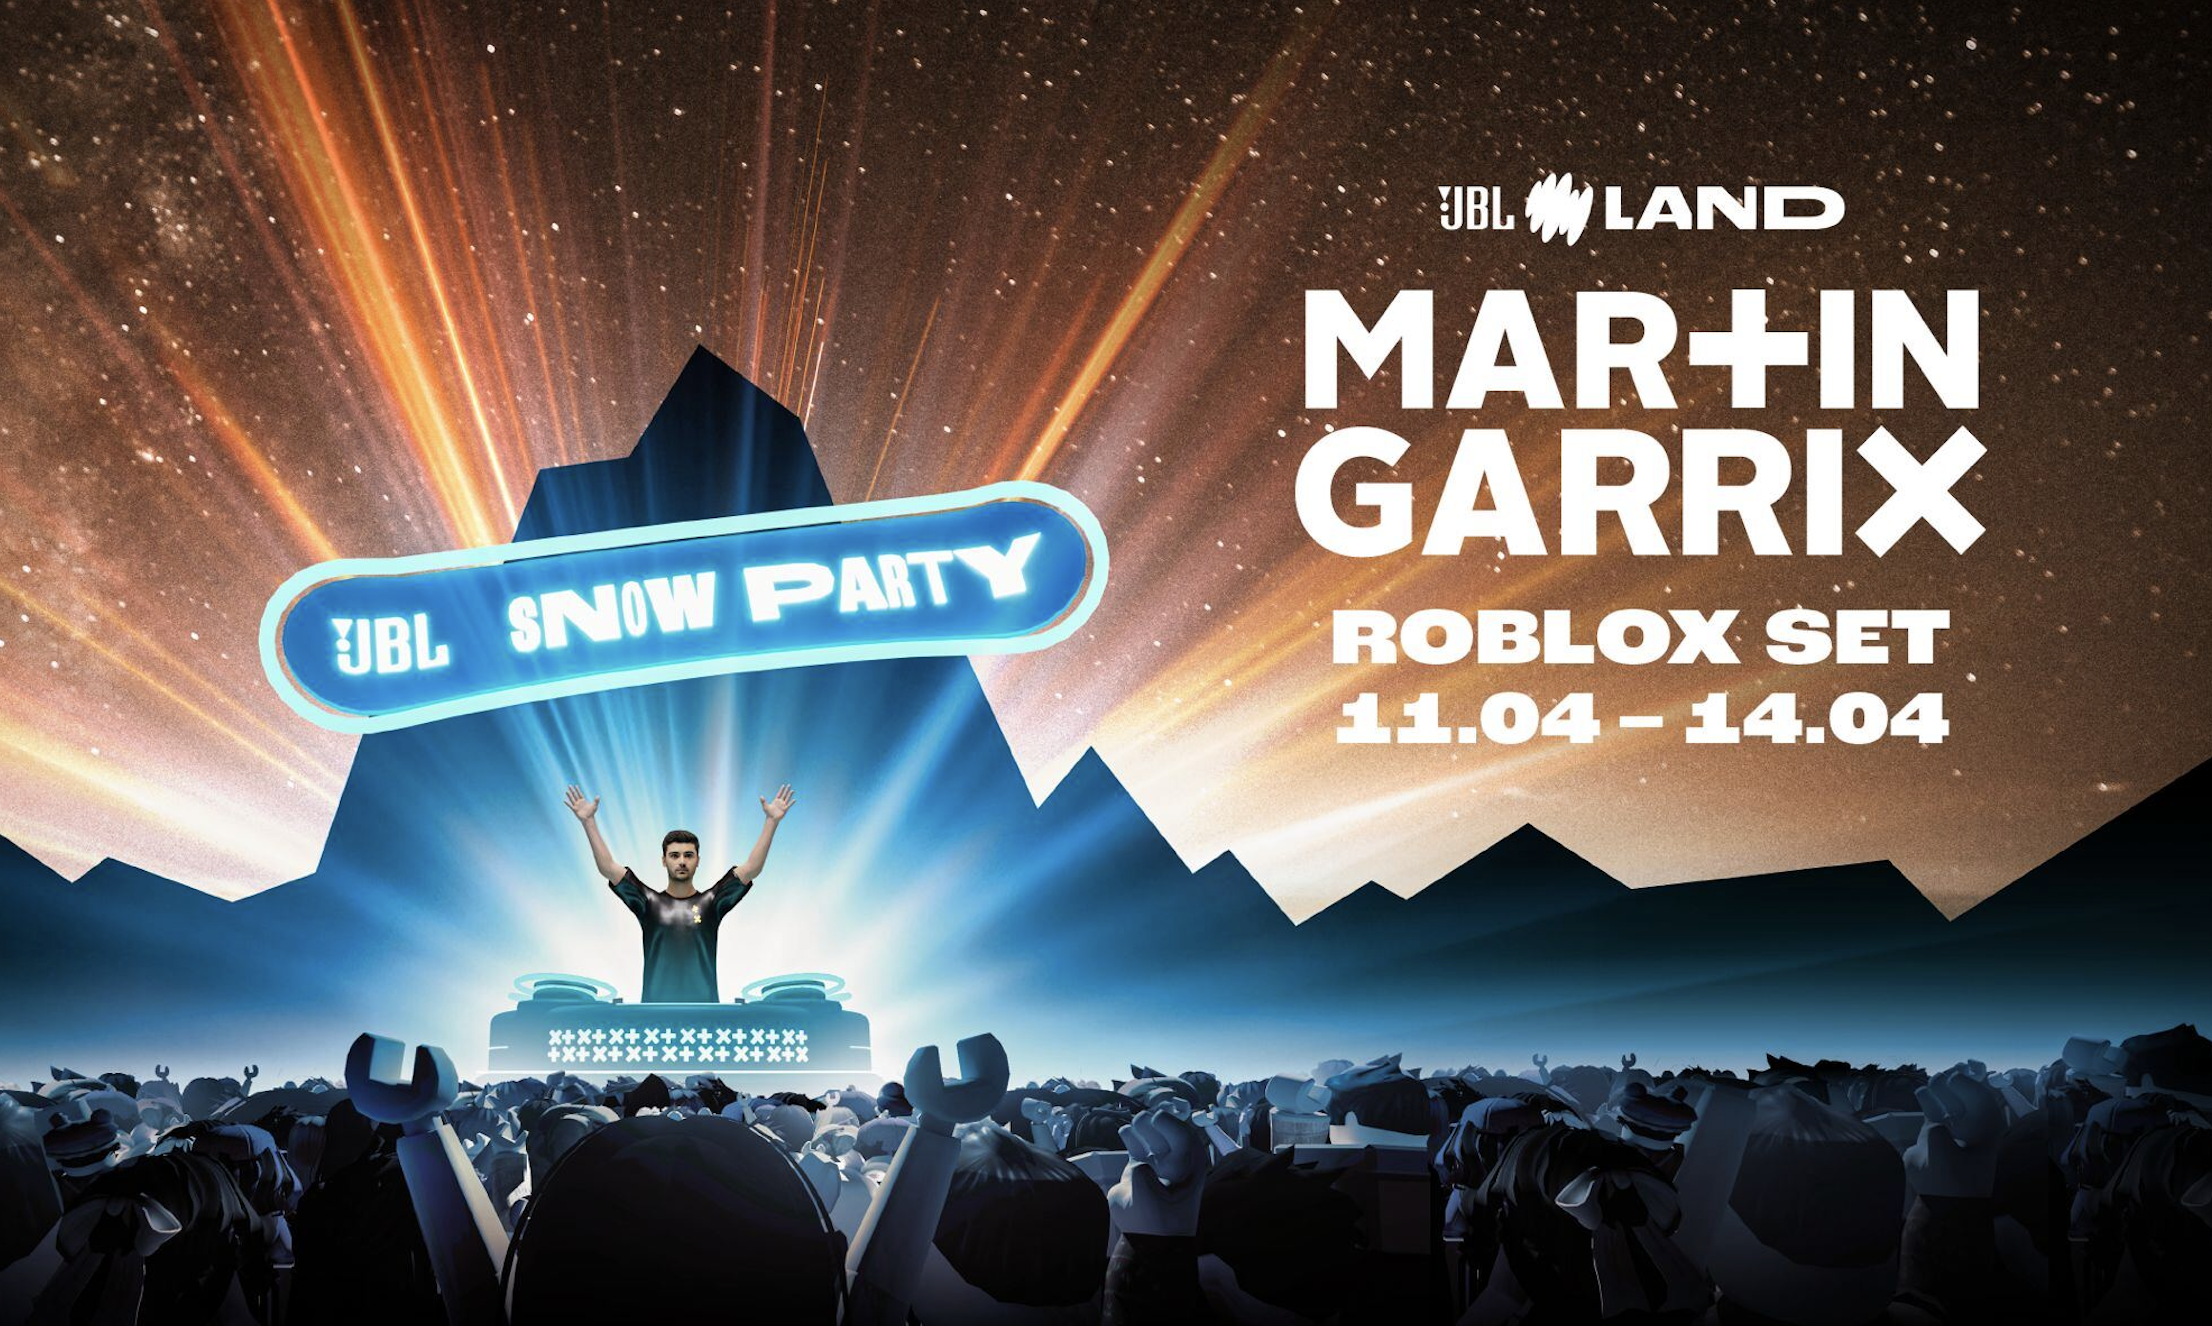  Martin Garrix pakt podium in JBL Land op Roblox met JBL Snow Party